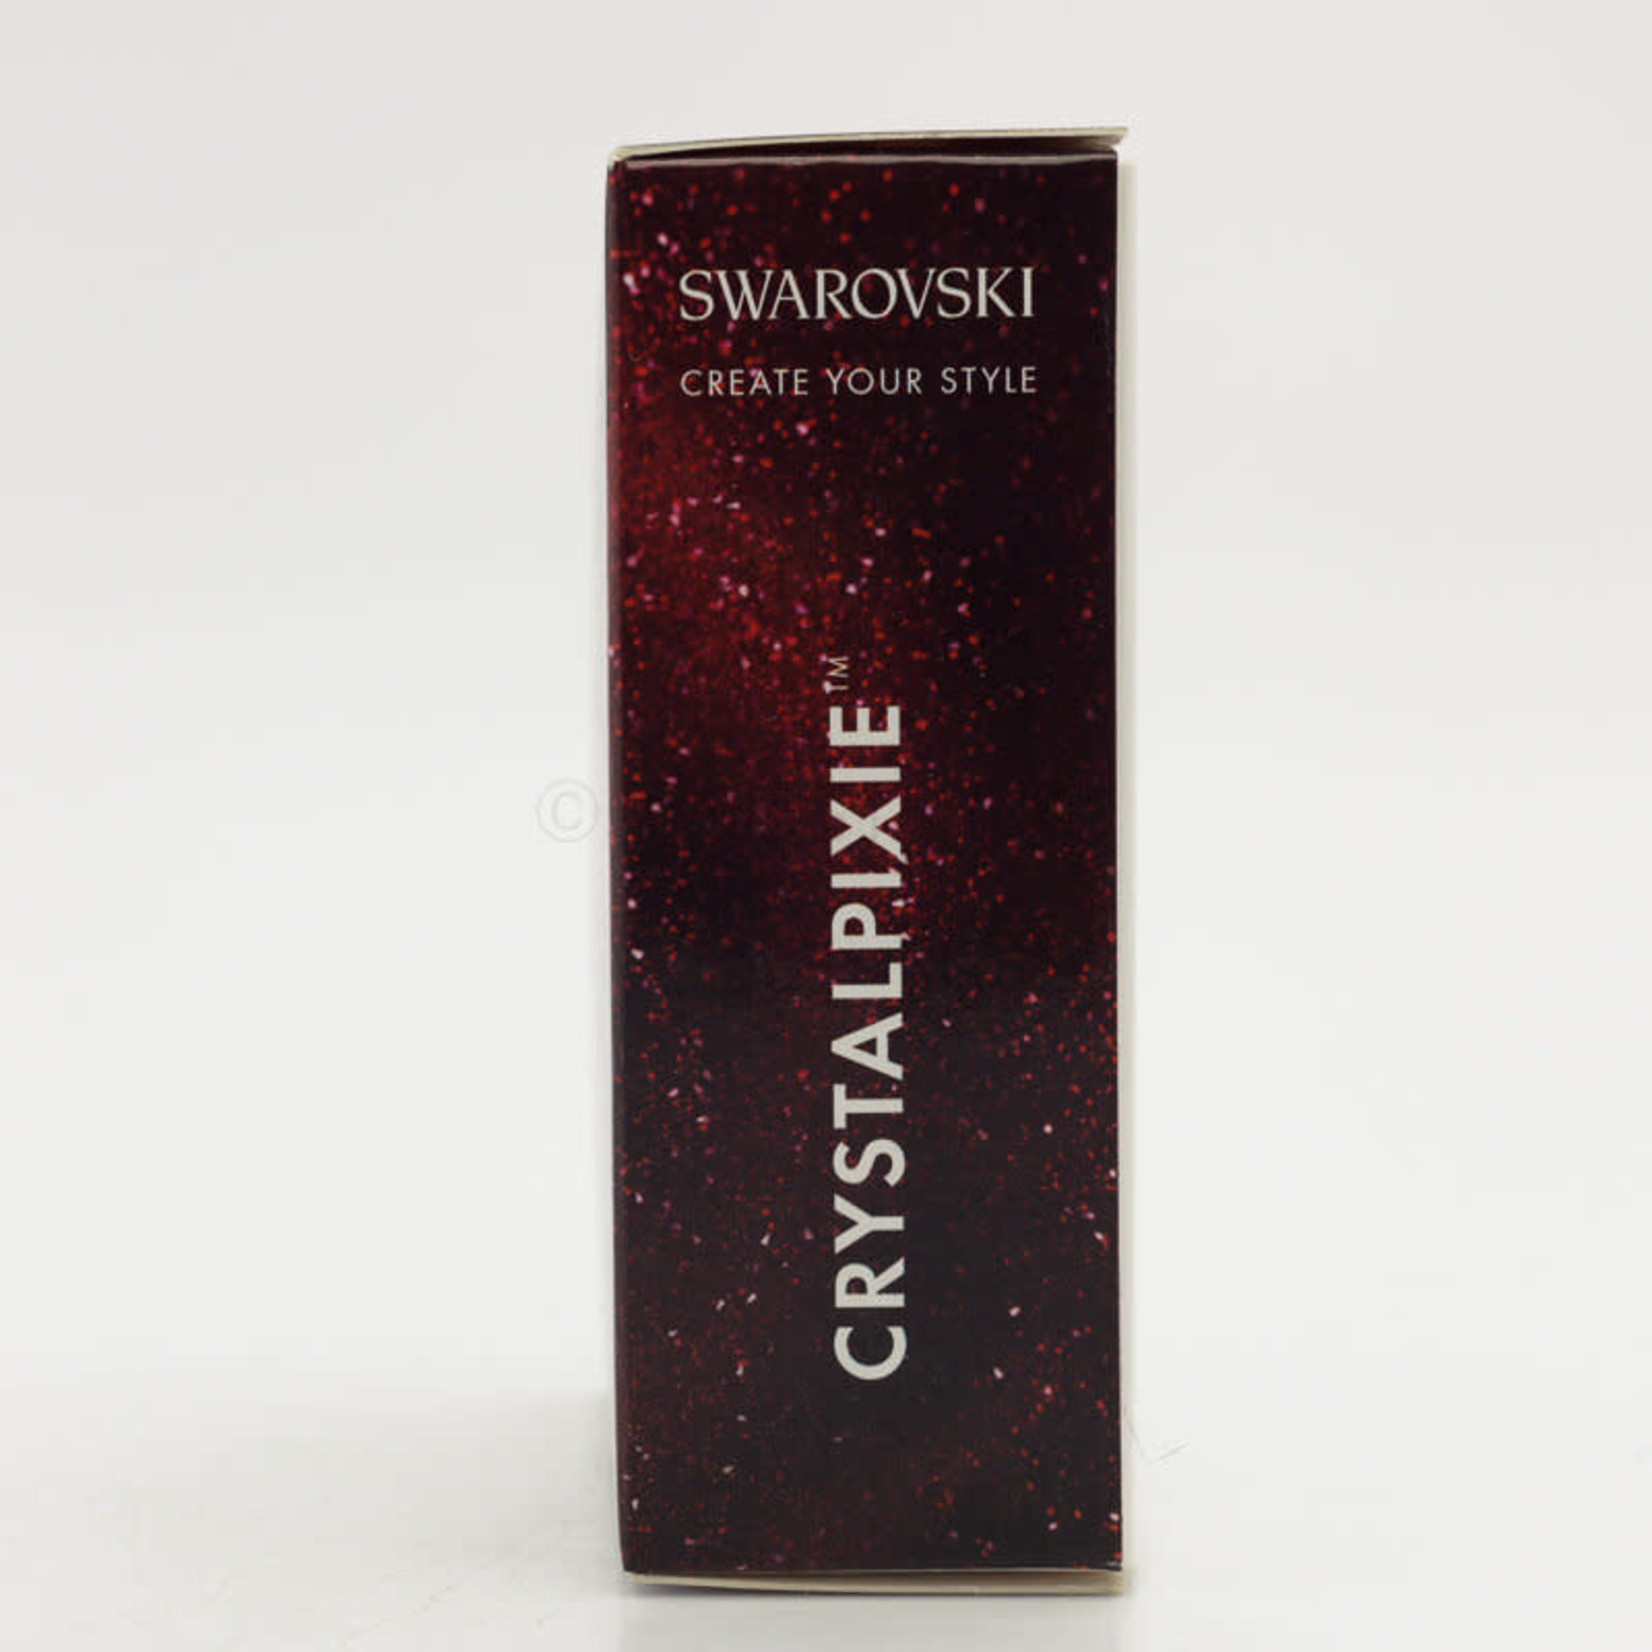 Swarovski Swarovski - Crystalpixie - Edge - Heart's Desire - 5g